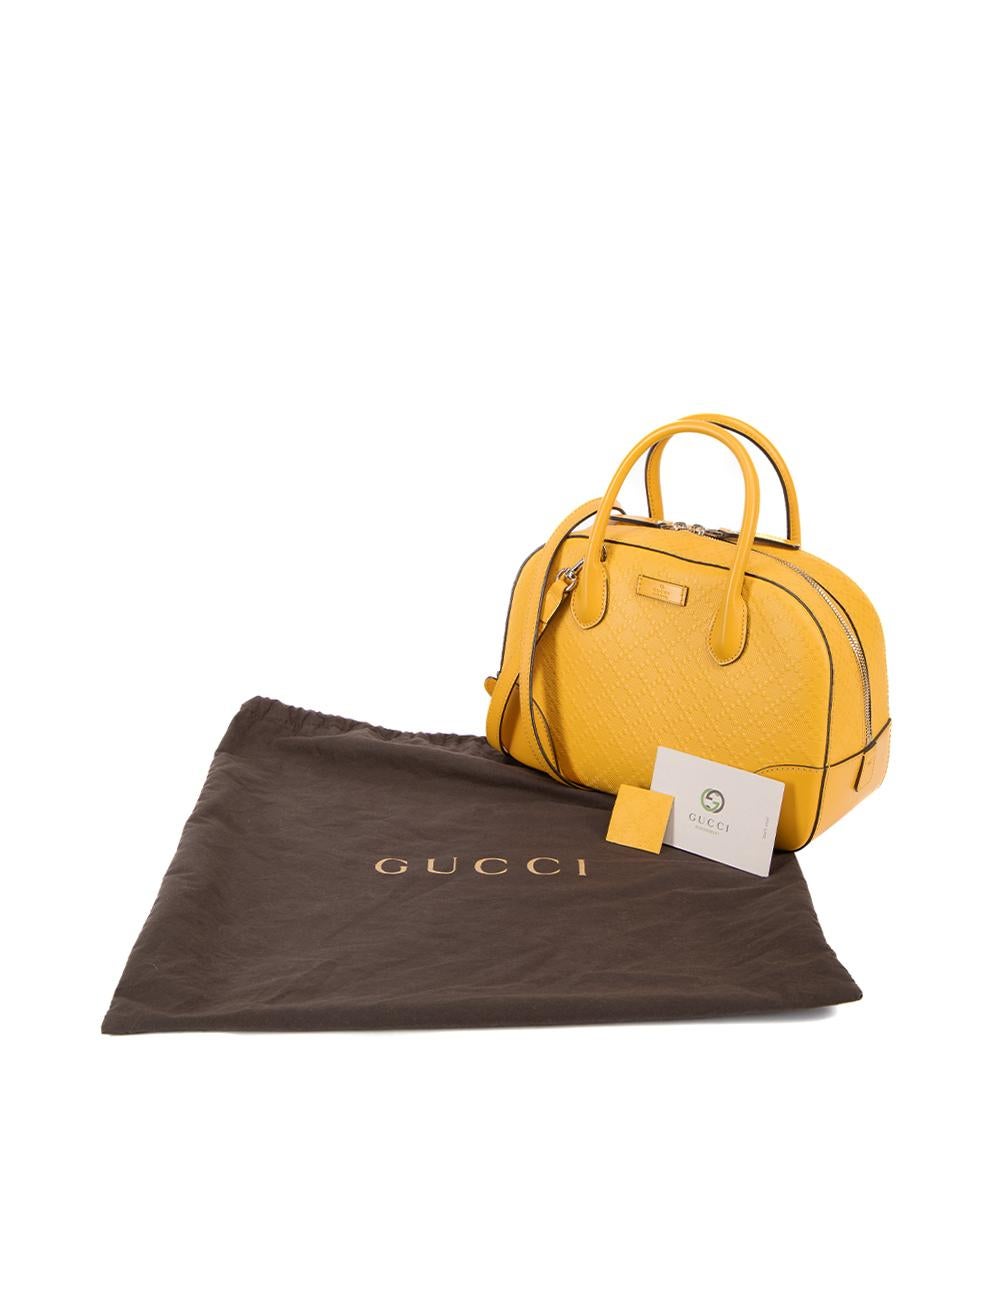 Gucci Women's Yellow Bright Diamante Leather Satchel 4